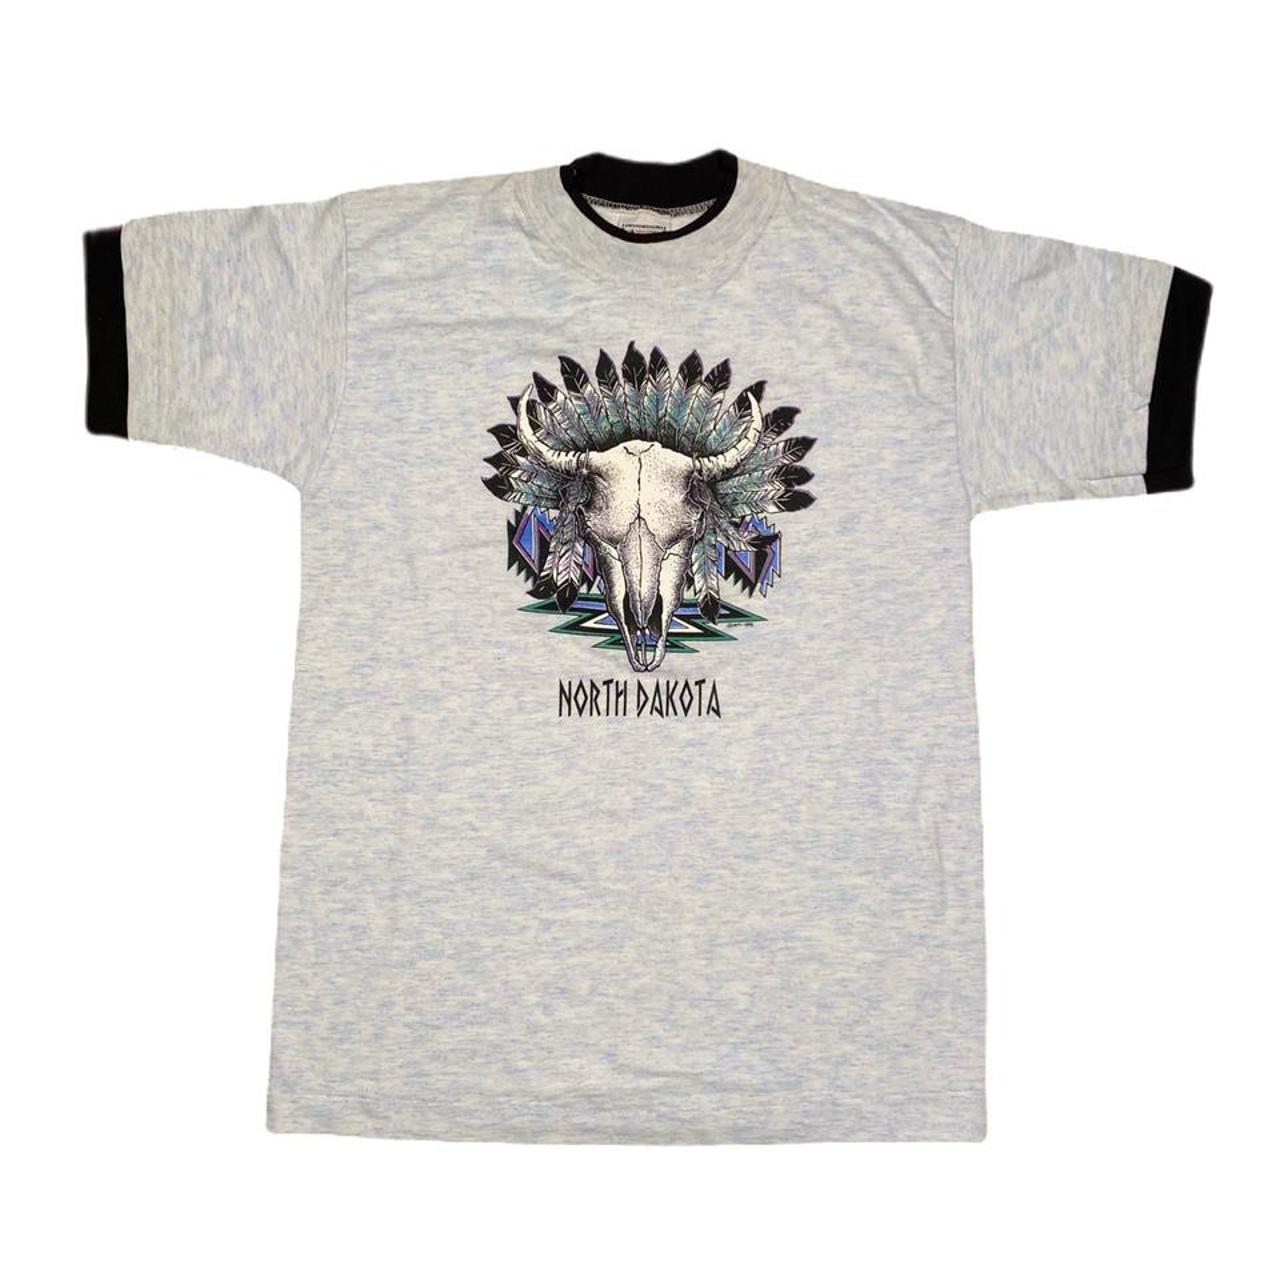 Made in North Dakota Vintage Eagle T-shirt